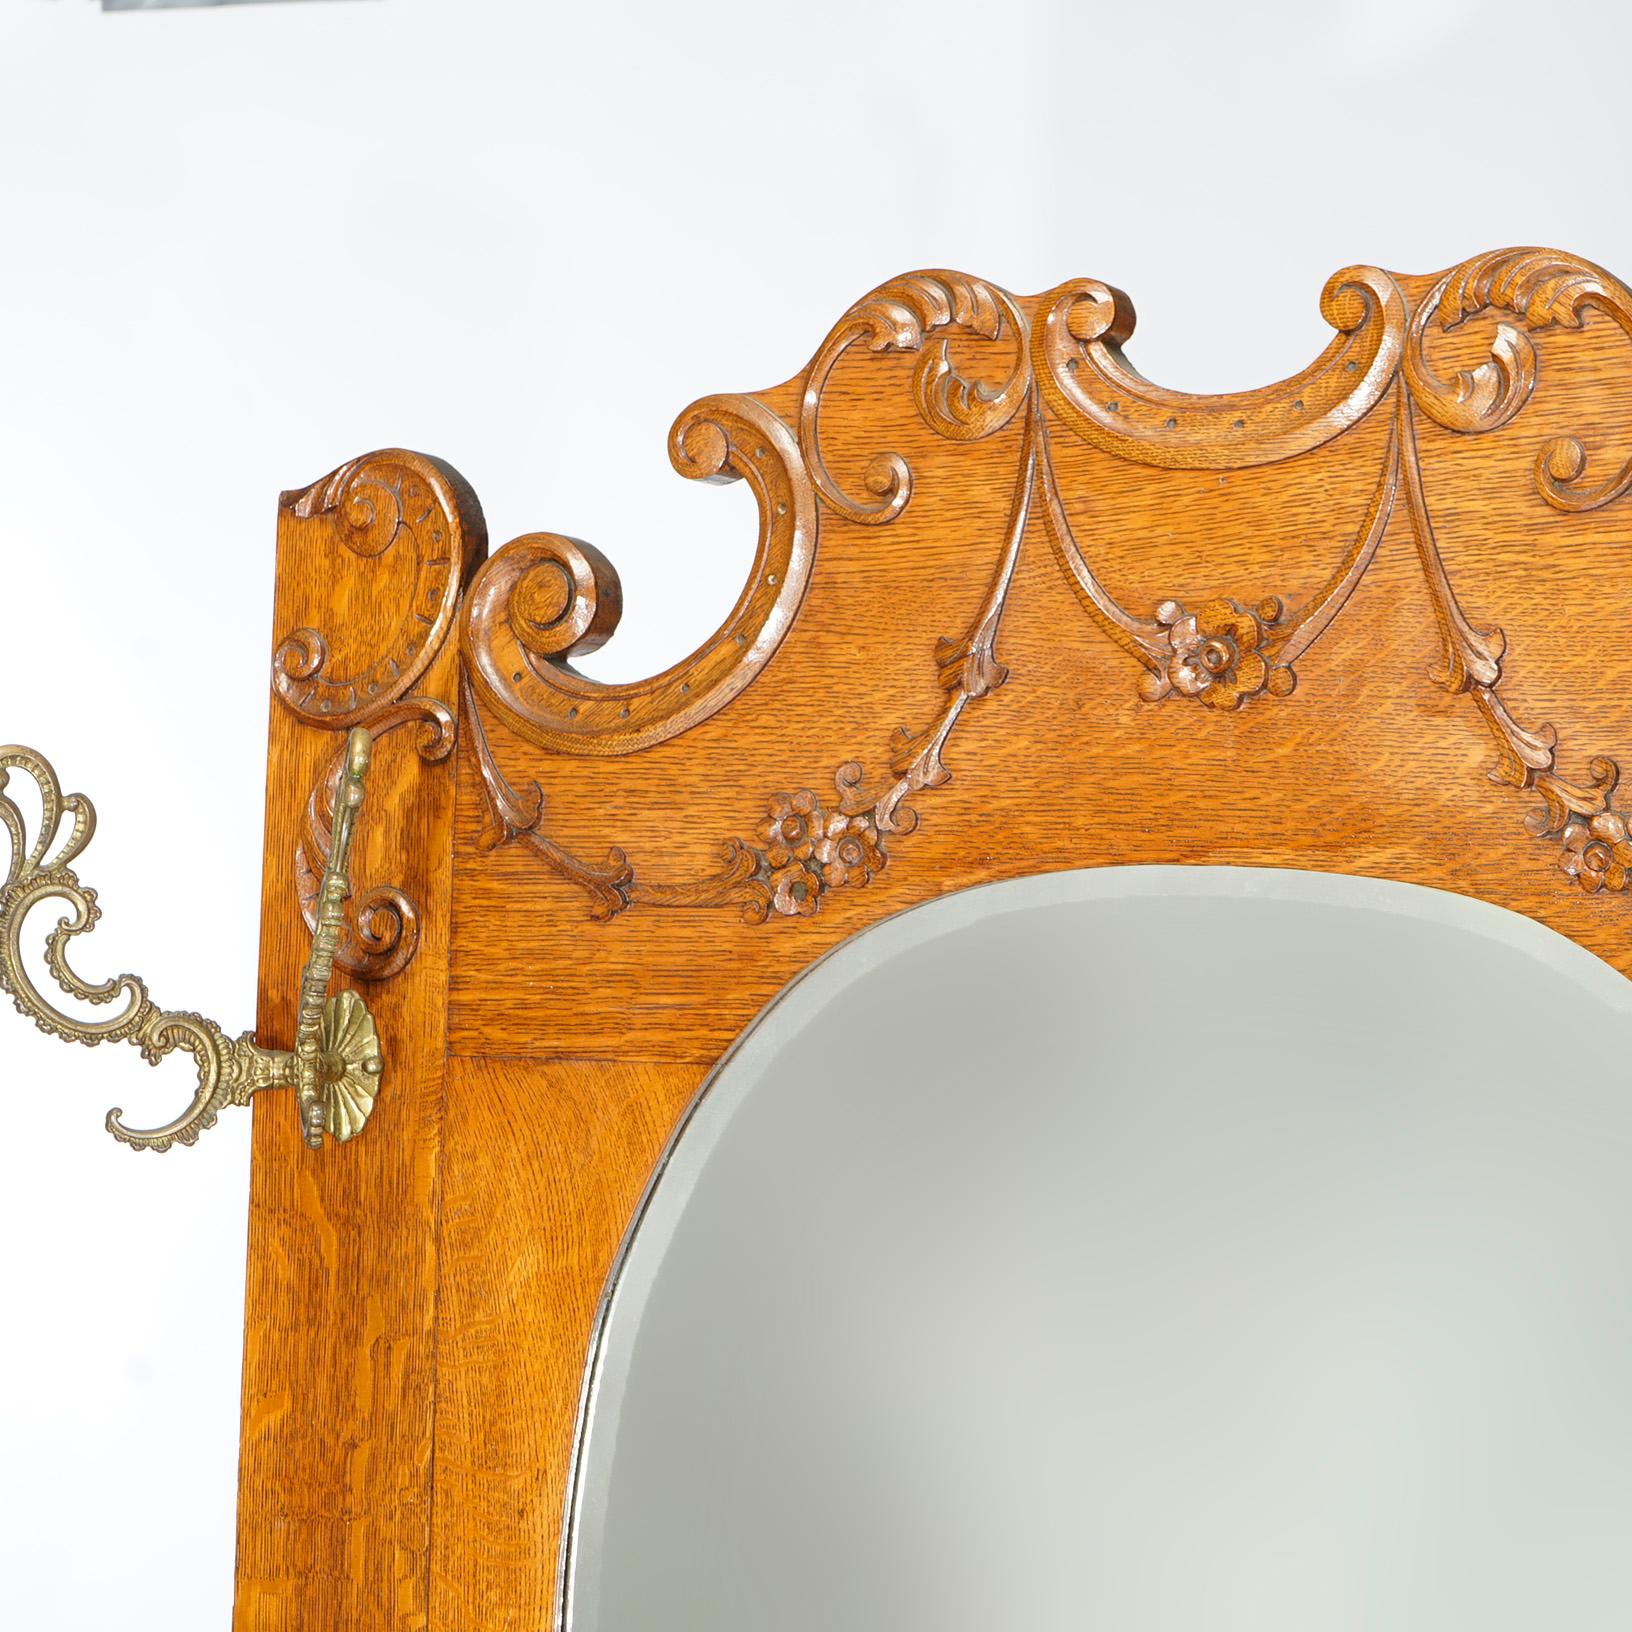 20th Century Antique RJ Horner Golden Oak Hall Seat with Horse Shoe Form Mirror circa 1900